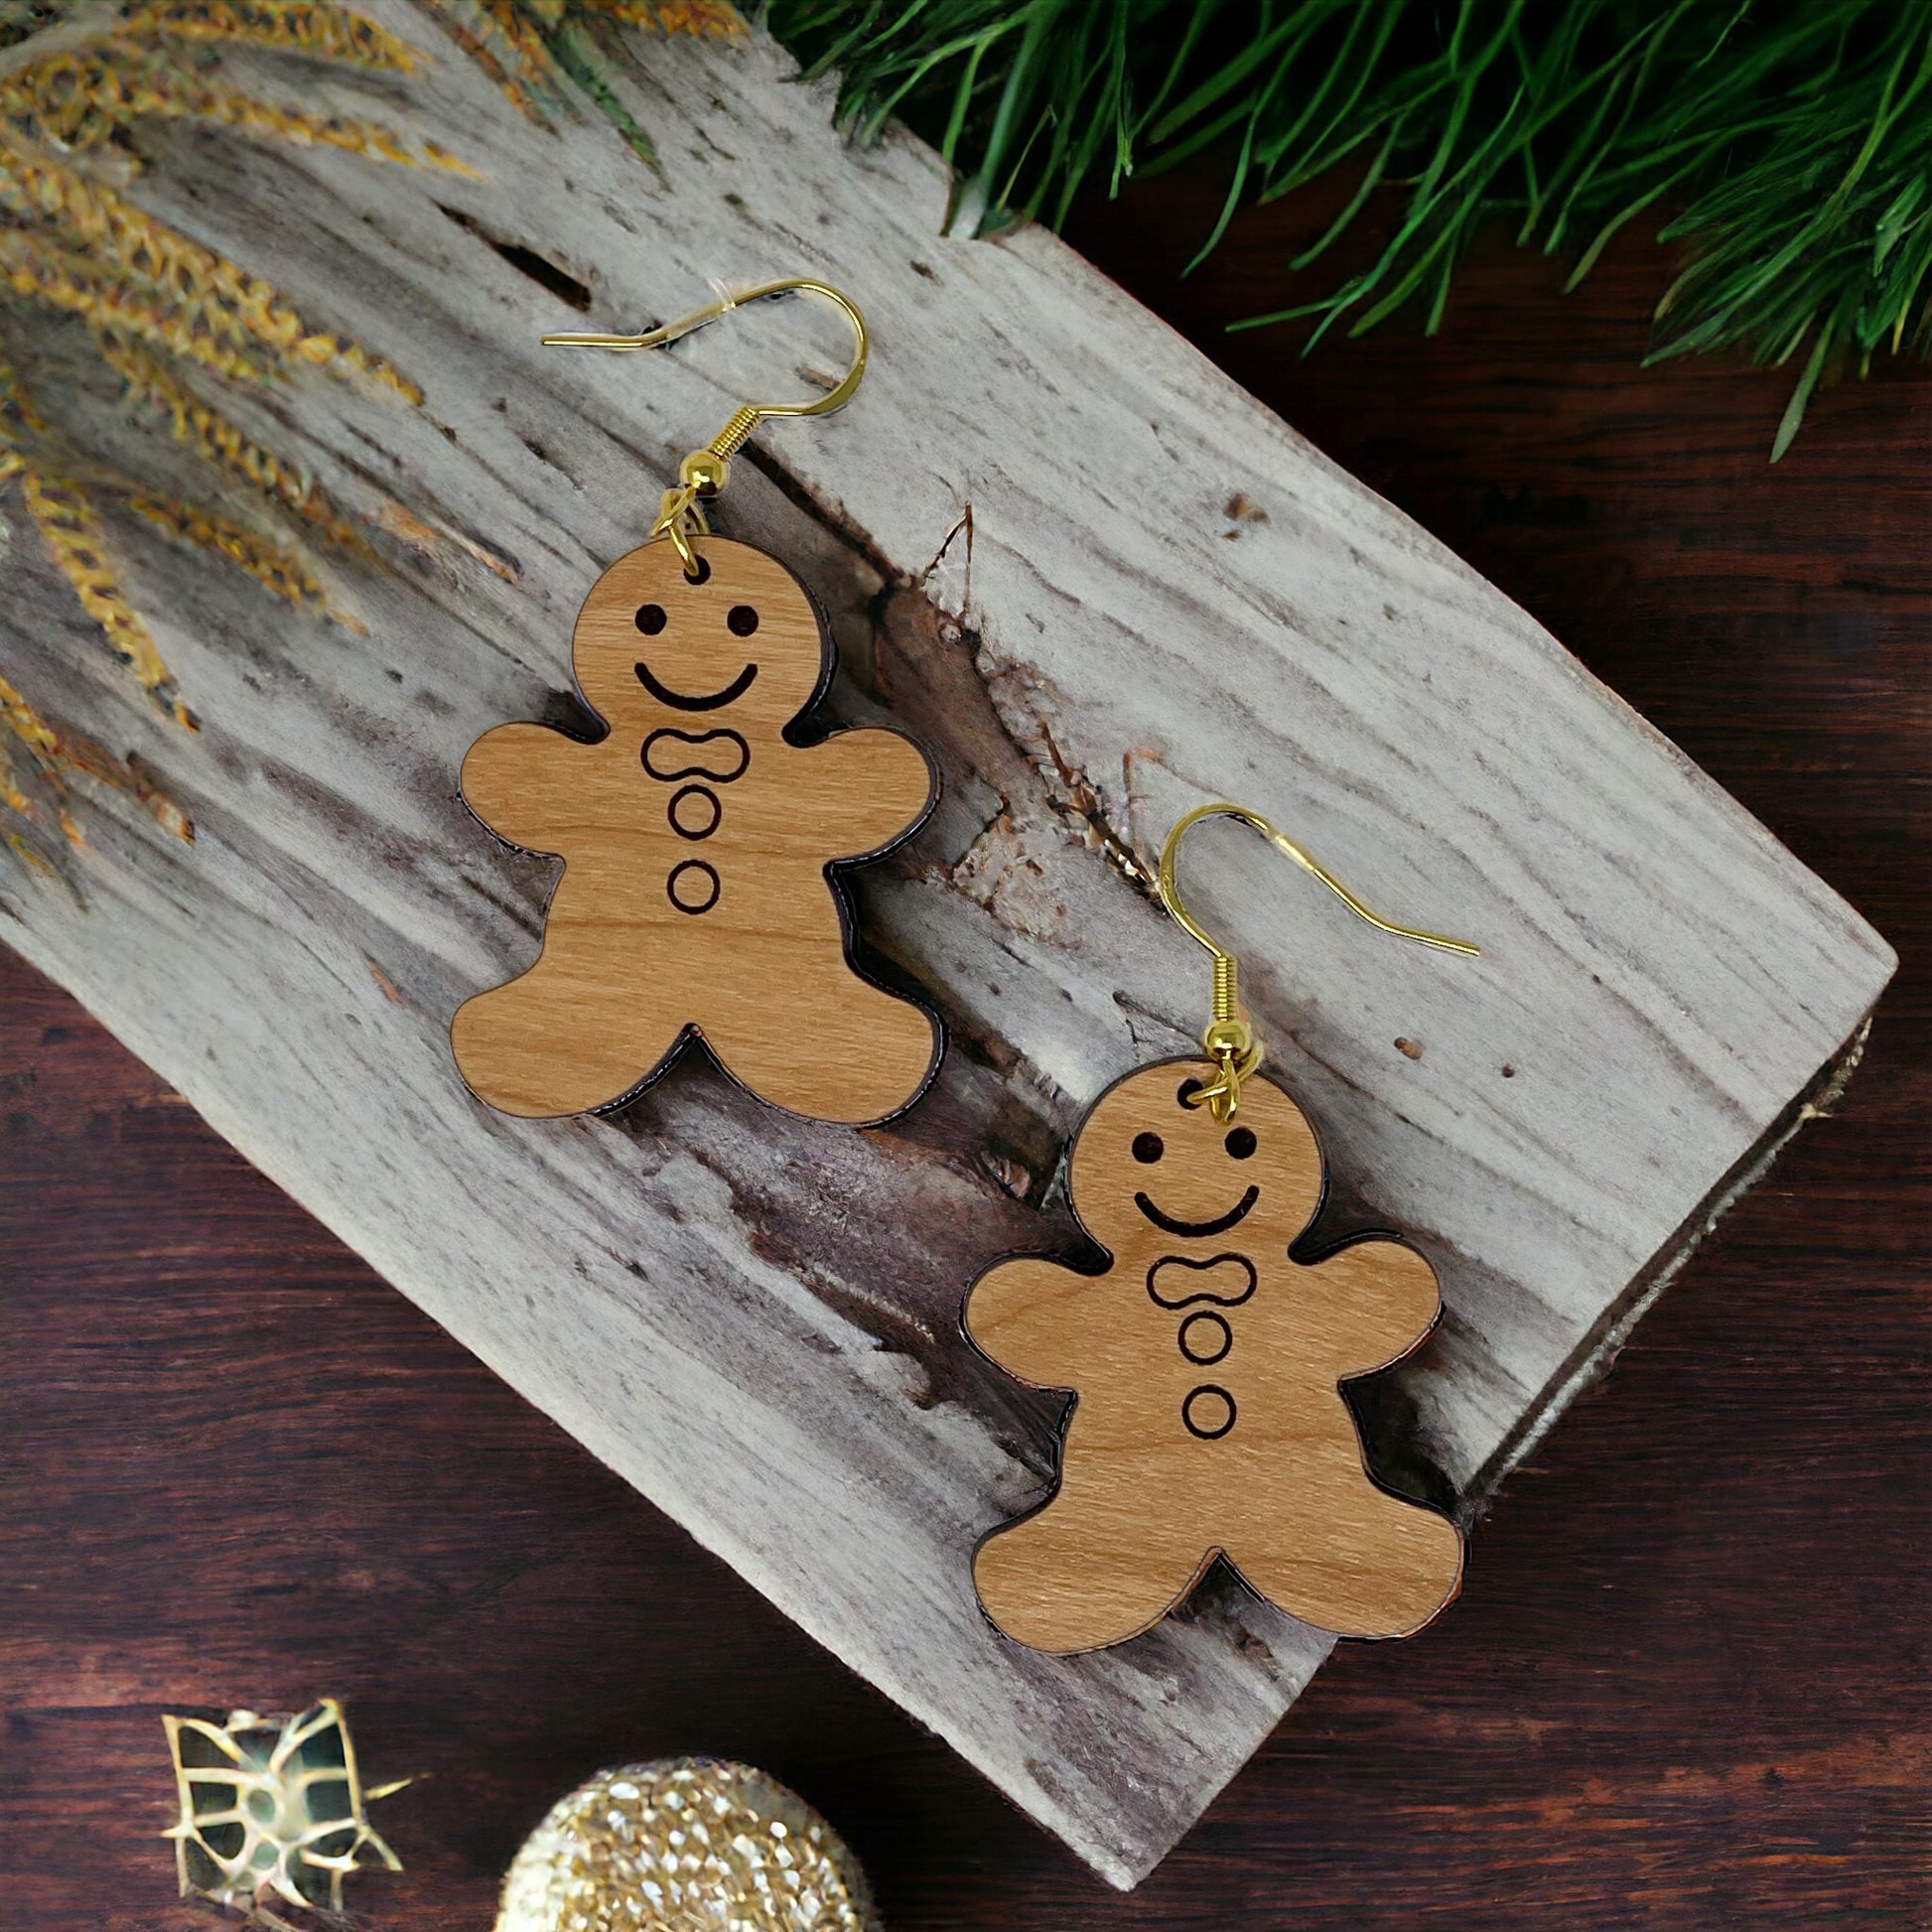 Gingerbread Man Earrings, Rustic Dangle Earring, Funny Wood Earring, Cute Winter Holiday Wooden Womens Earring, Country Western Xmas Jewelry